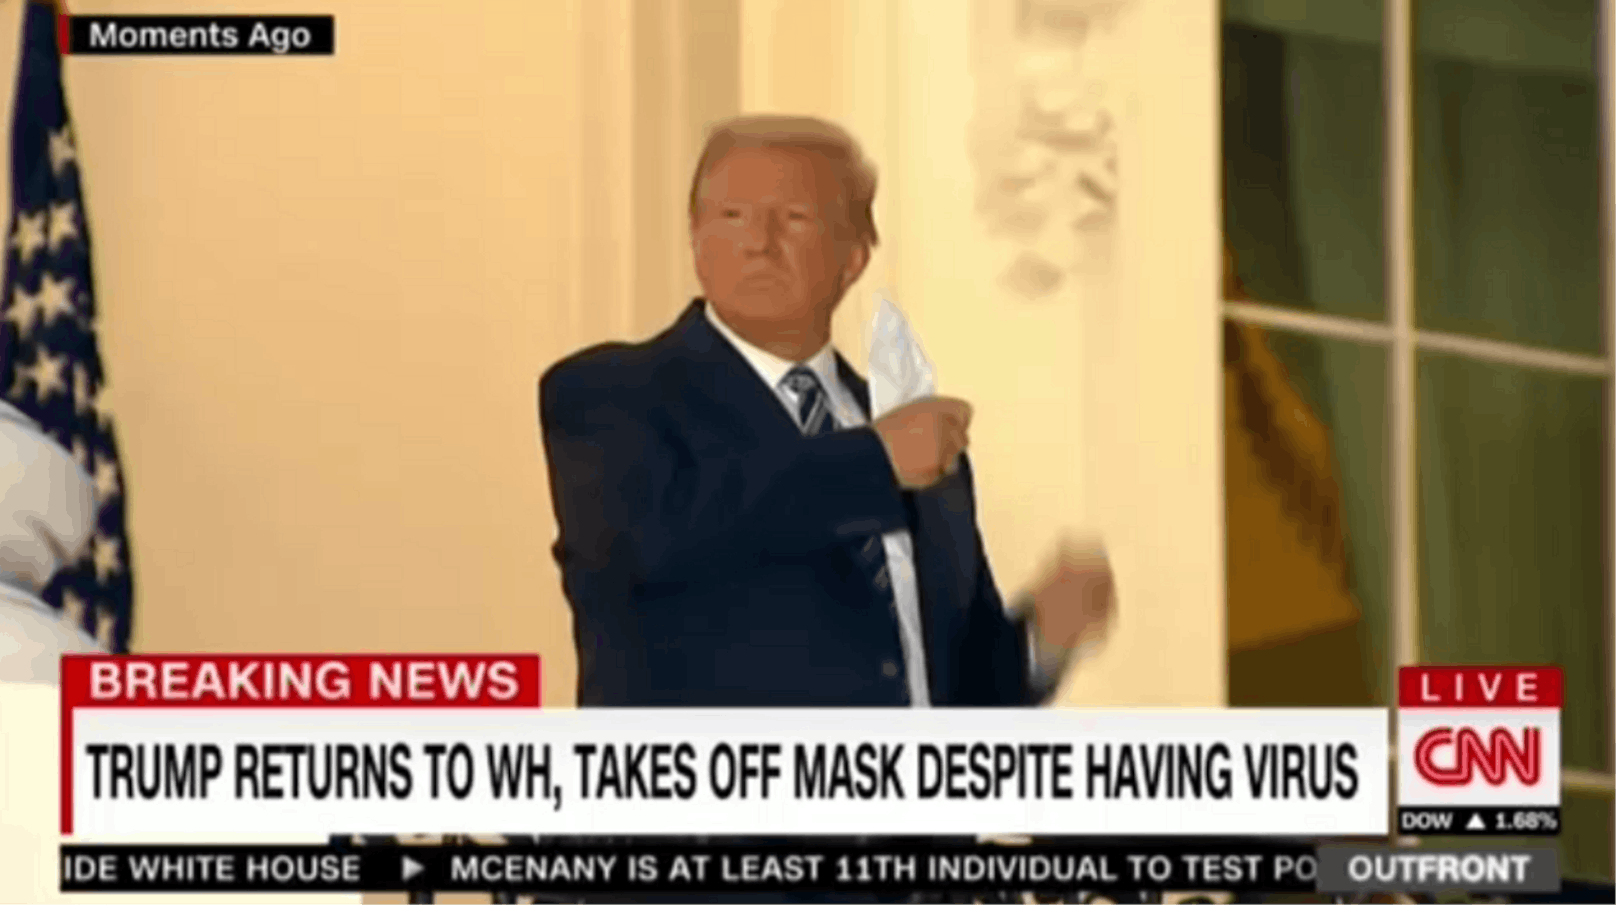 Trotz Coronavirus nimmt Donald Trump seine Maske ab